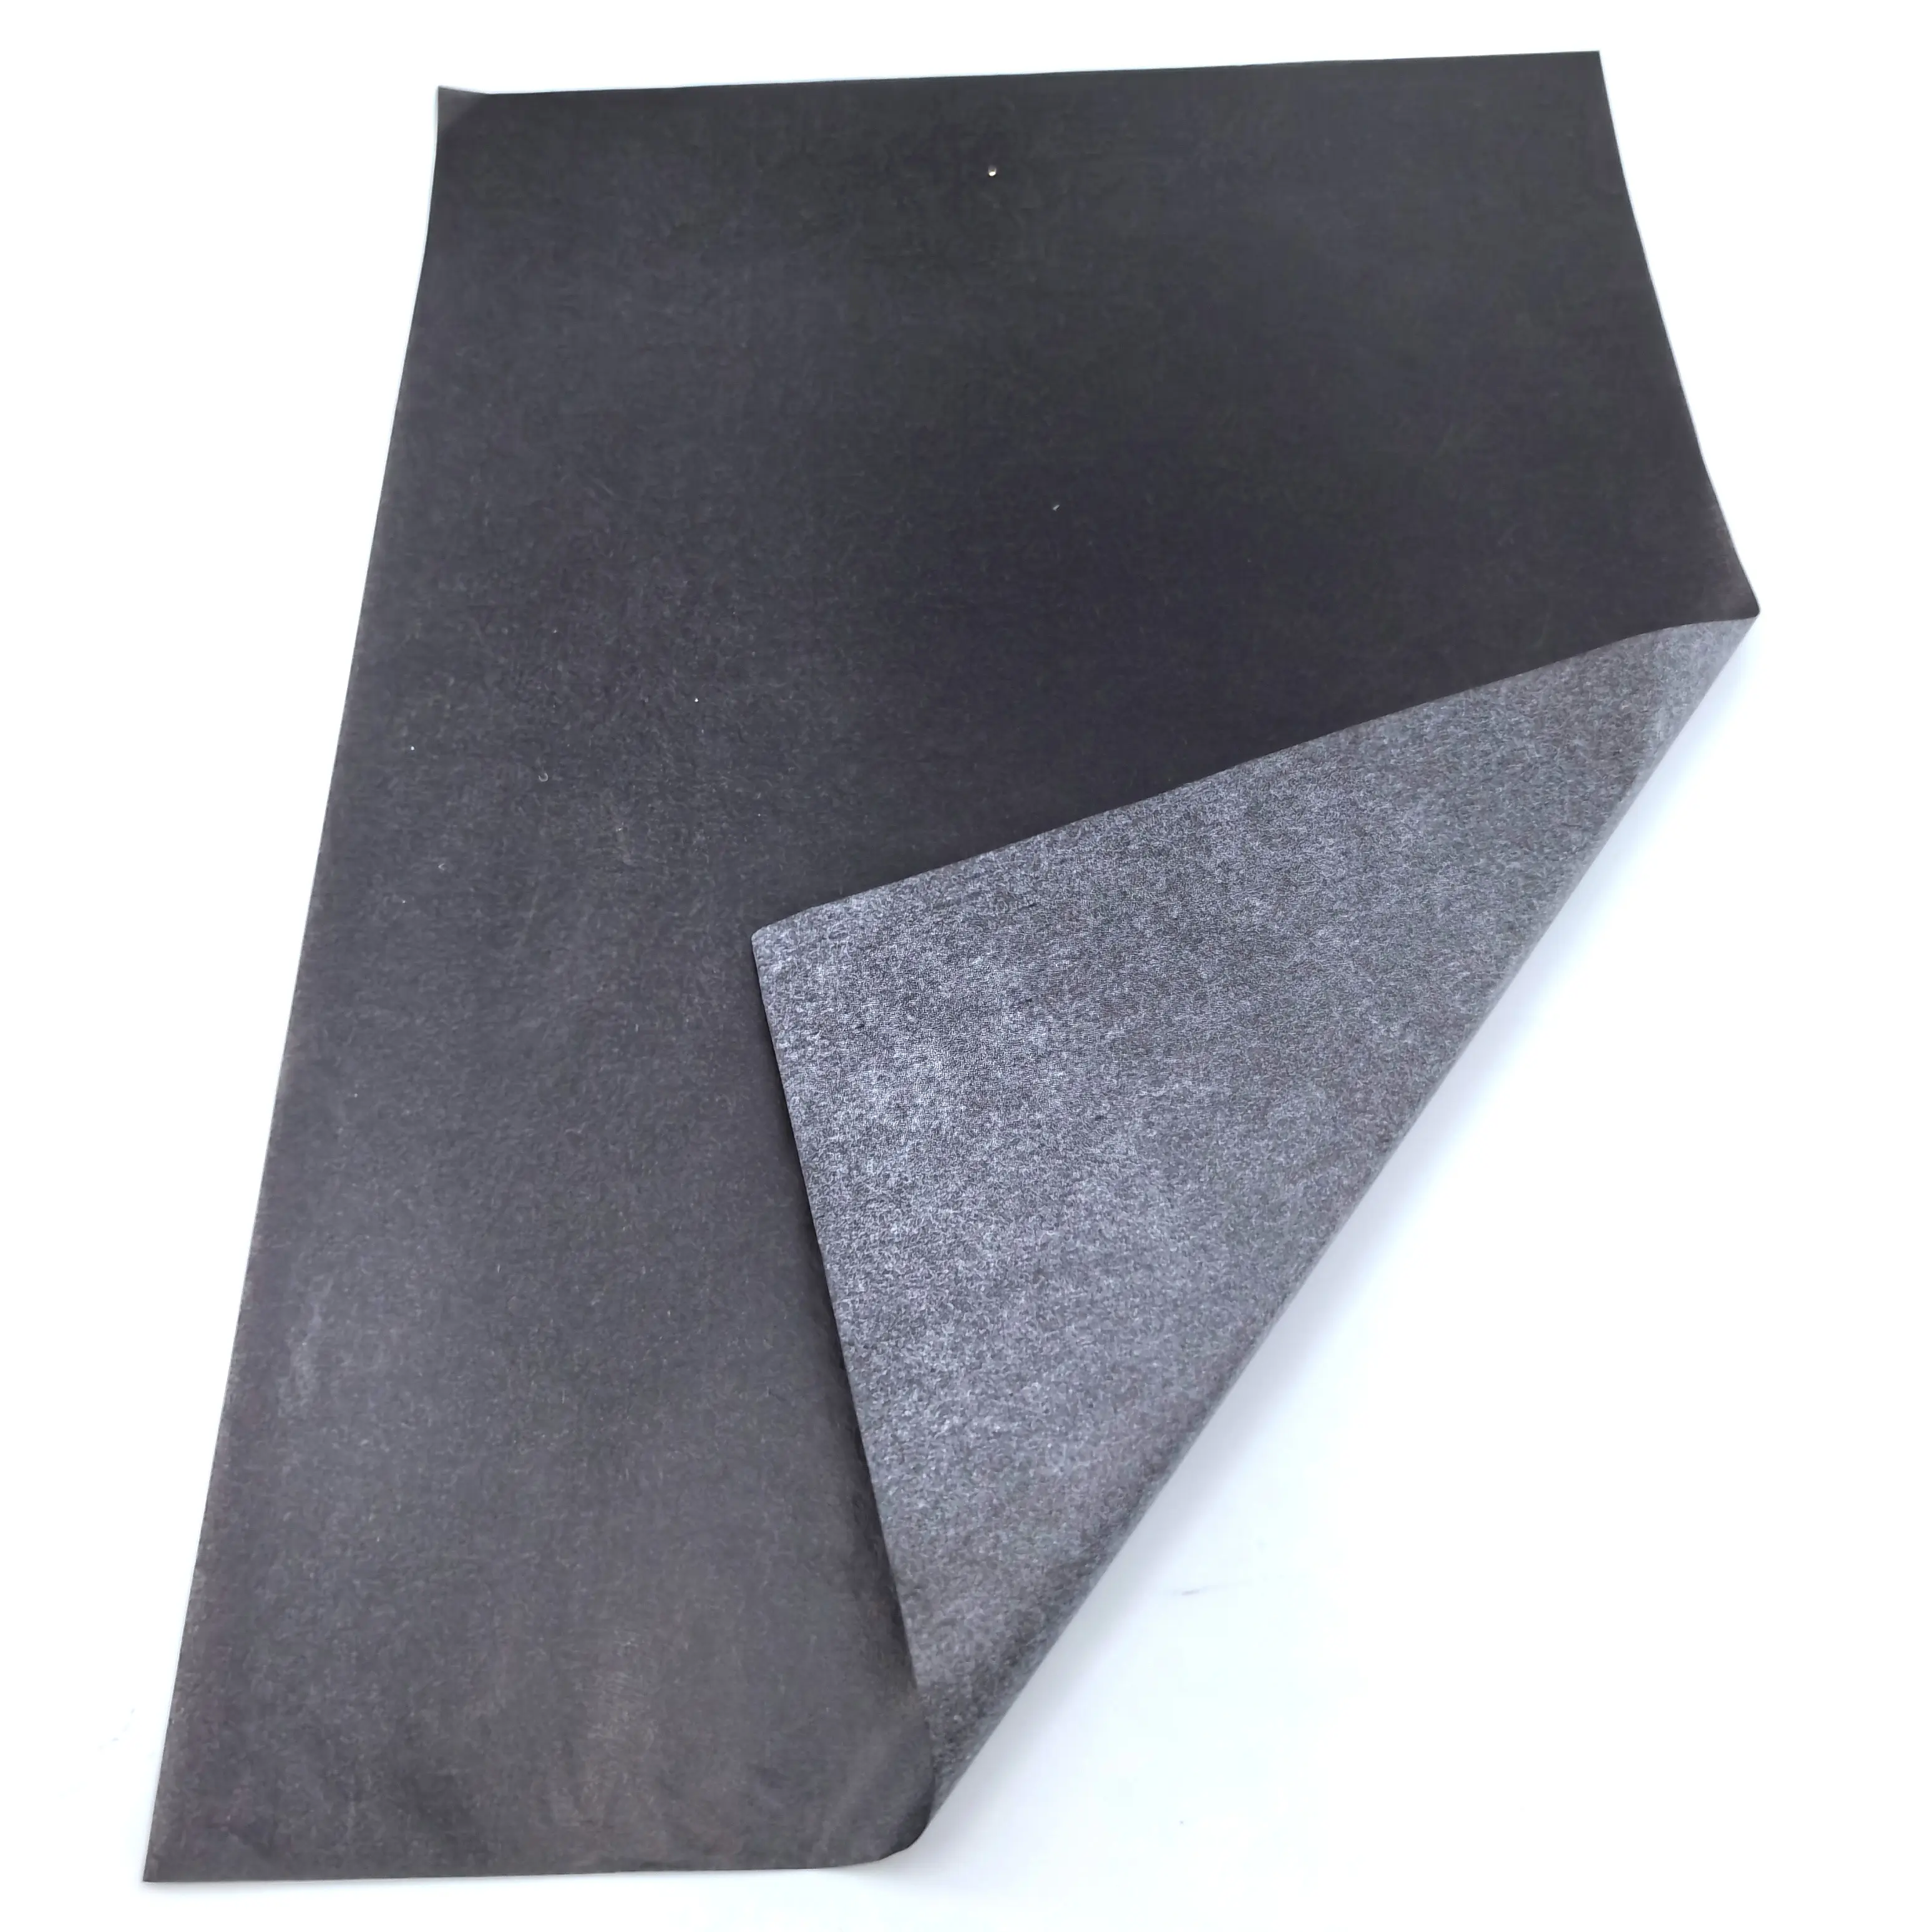 Siyah ve mavi karbon kopra kağidi el yazısı A4 Film karbon kağıt fatura kitap sanat kaynağı için grafit karbon Transfer kağıdı